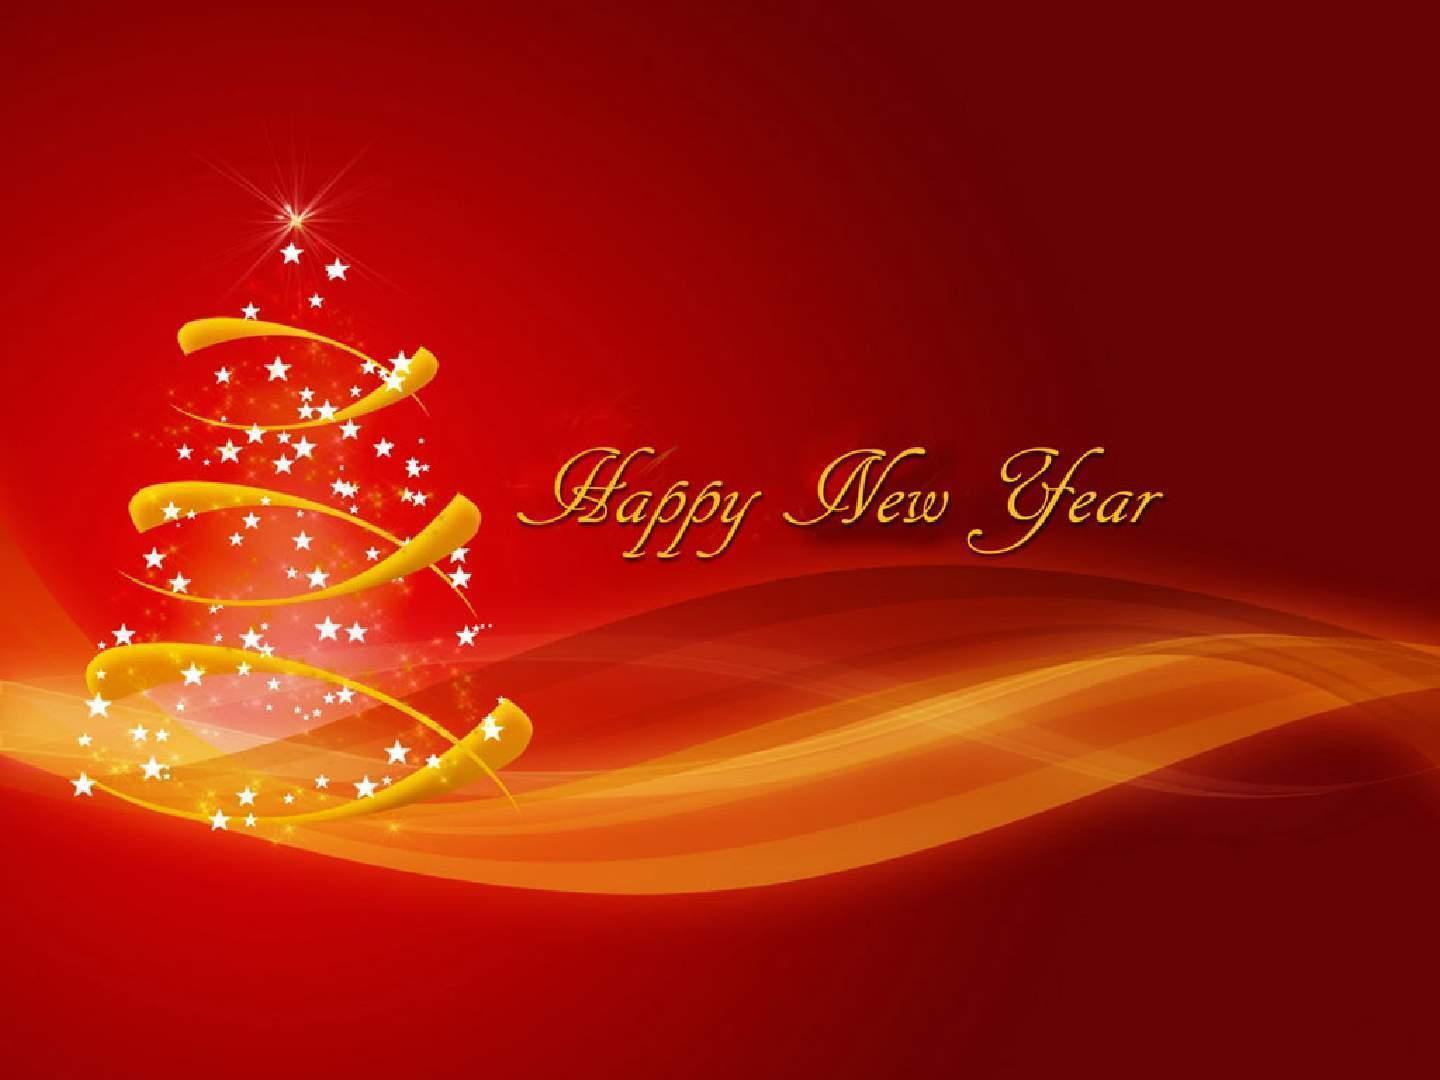 Happy New Year tree decoration free greeting card desktop